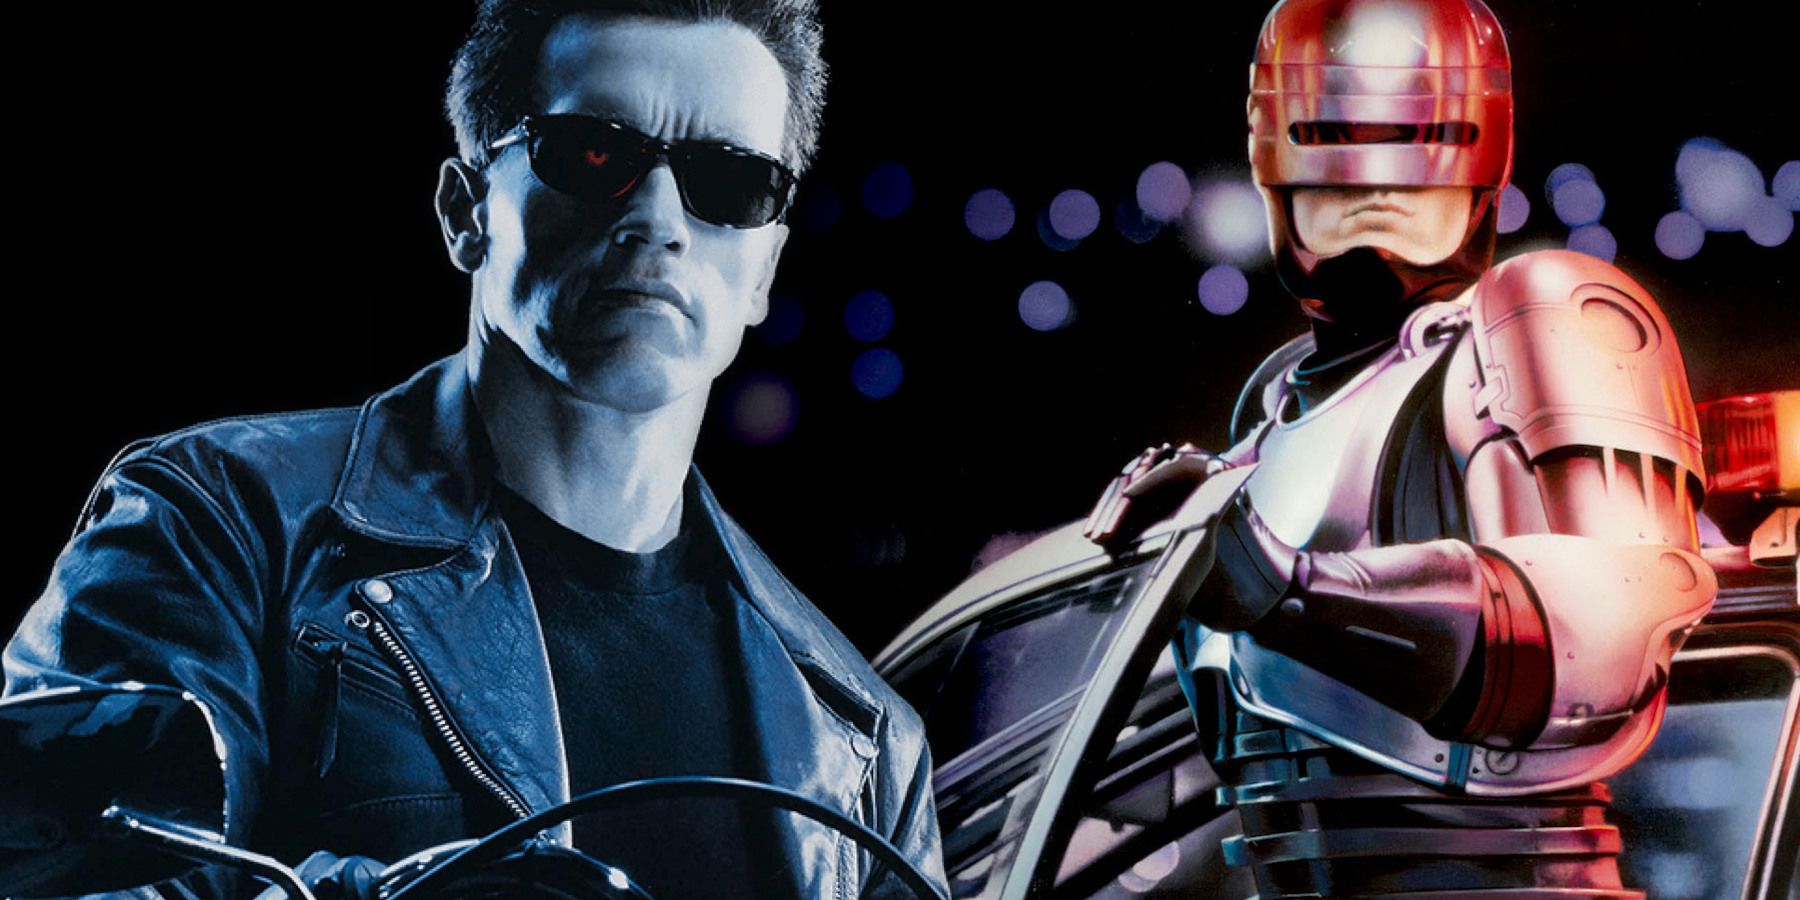 Robocop and Terminator